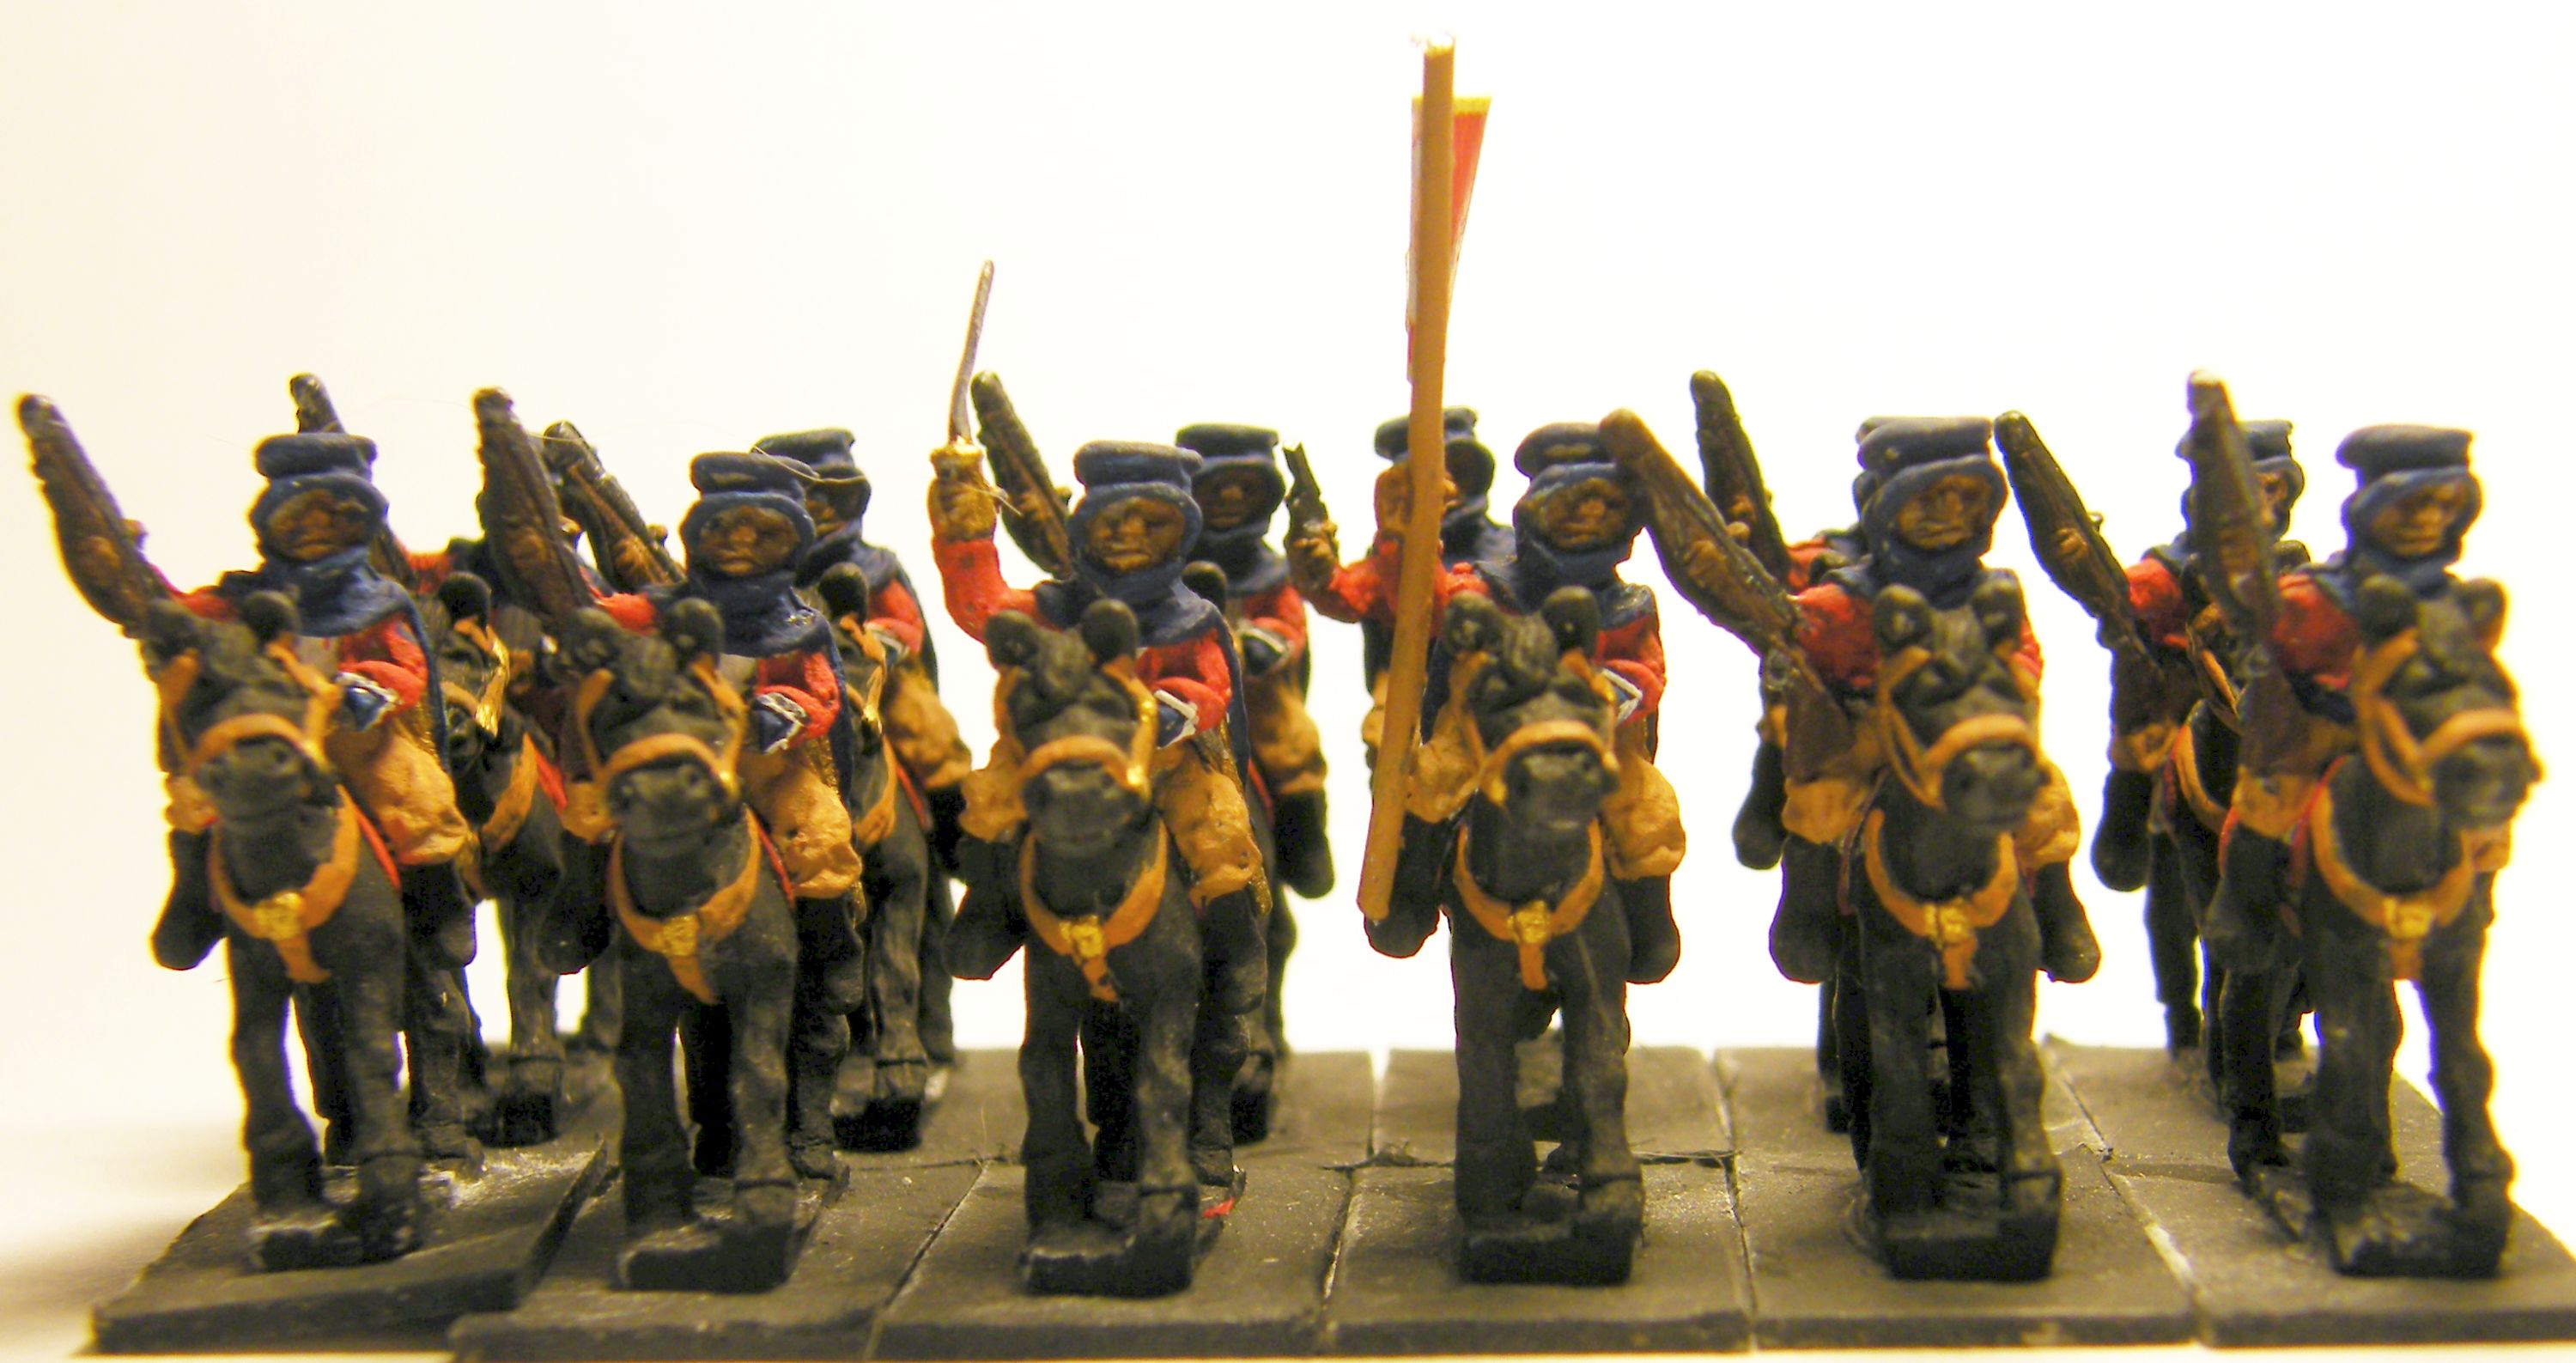 Mounted Bashaw's Palace Guards